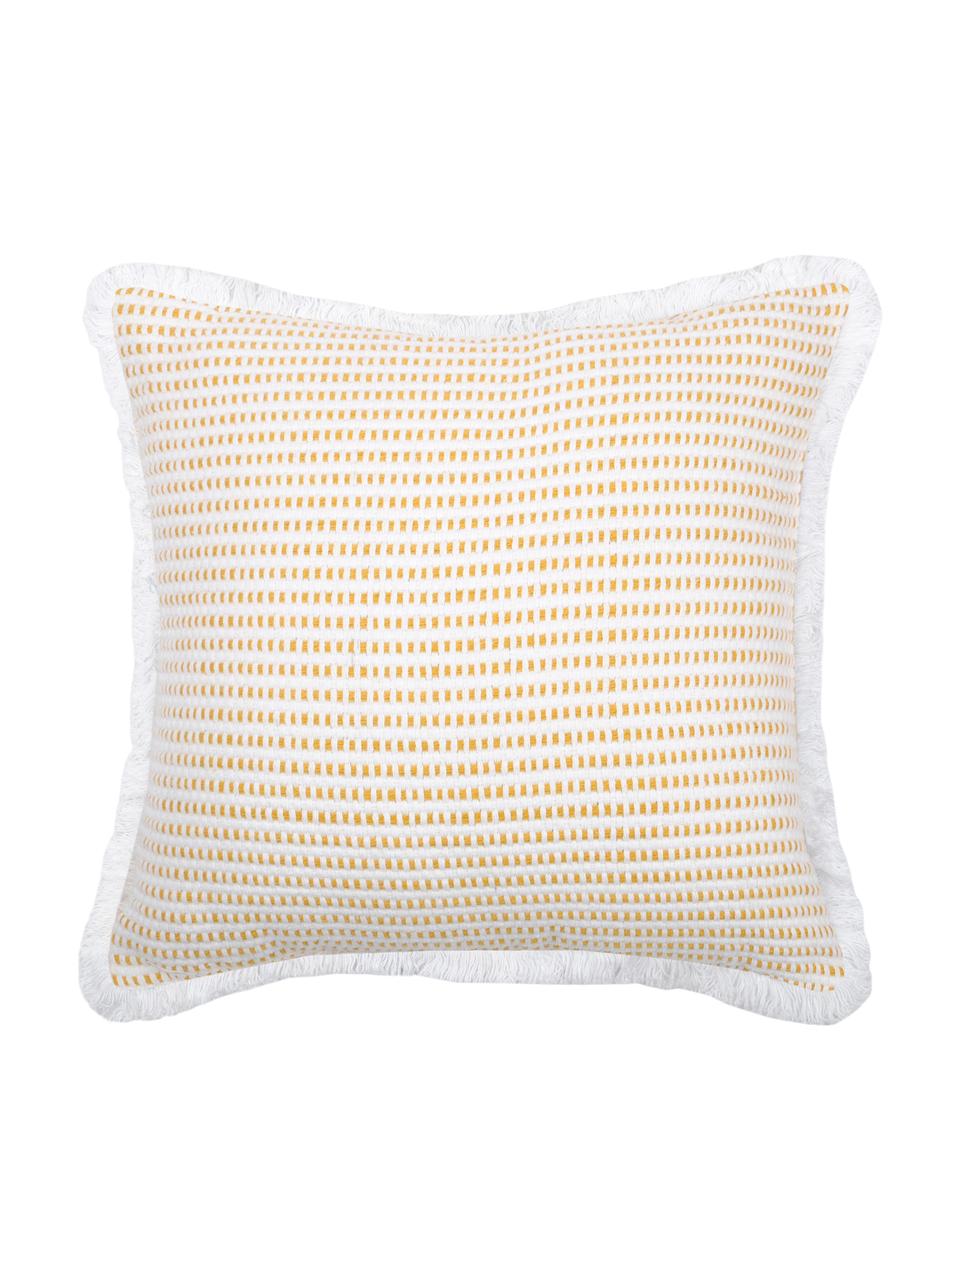 Cuscino con imbottitura giallo/bianco Salamanca, Cotone, Bianco, giallo, Larg. 40 x Lung. 40 cm